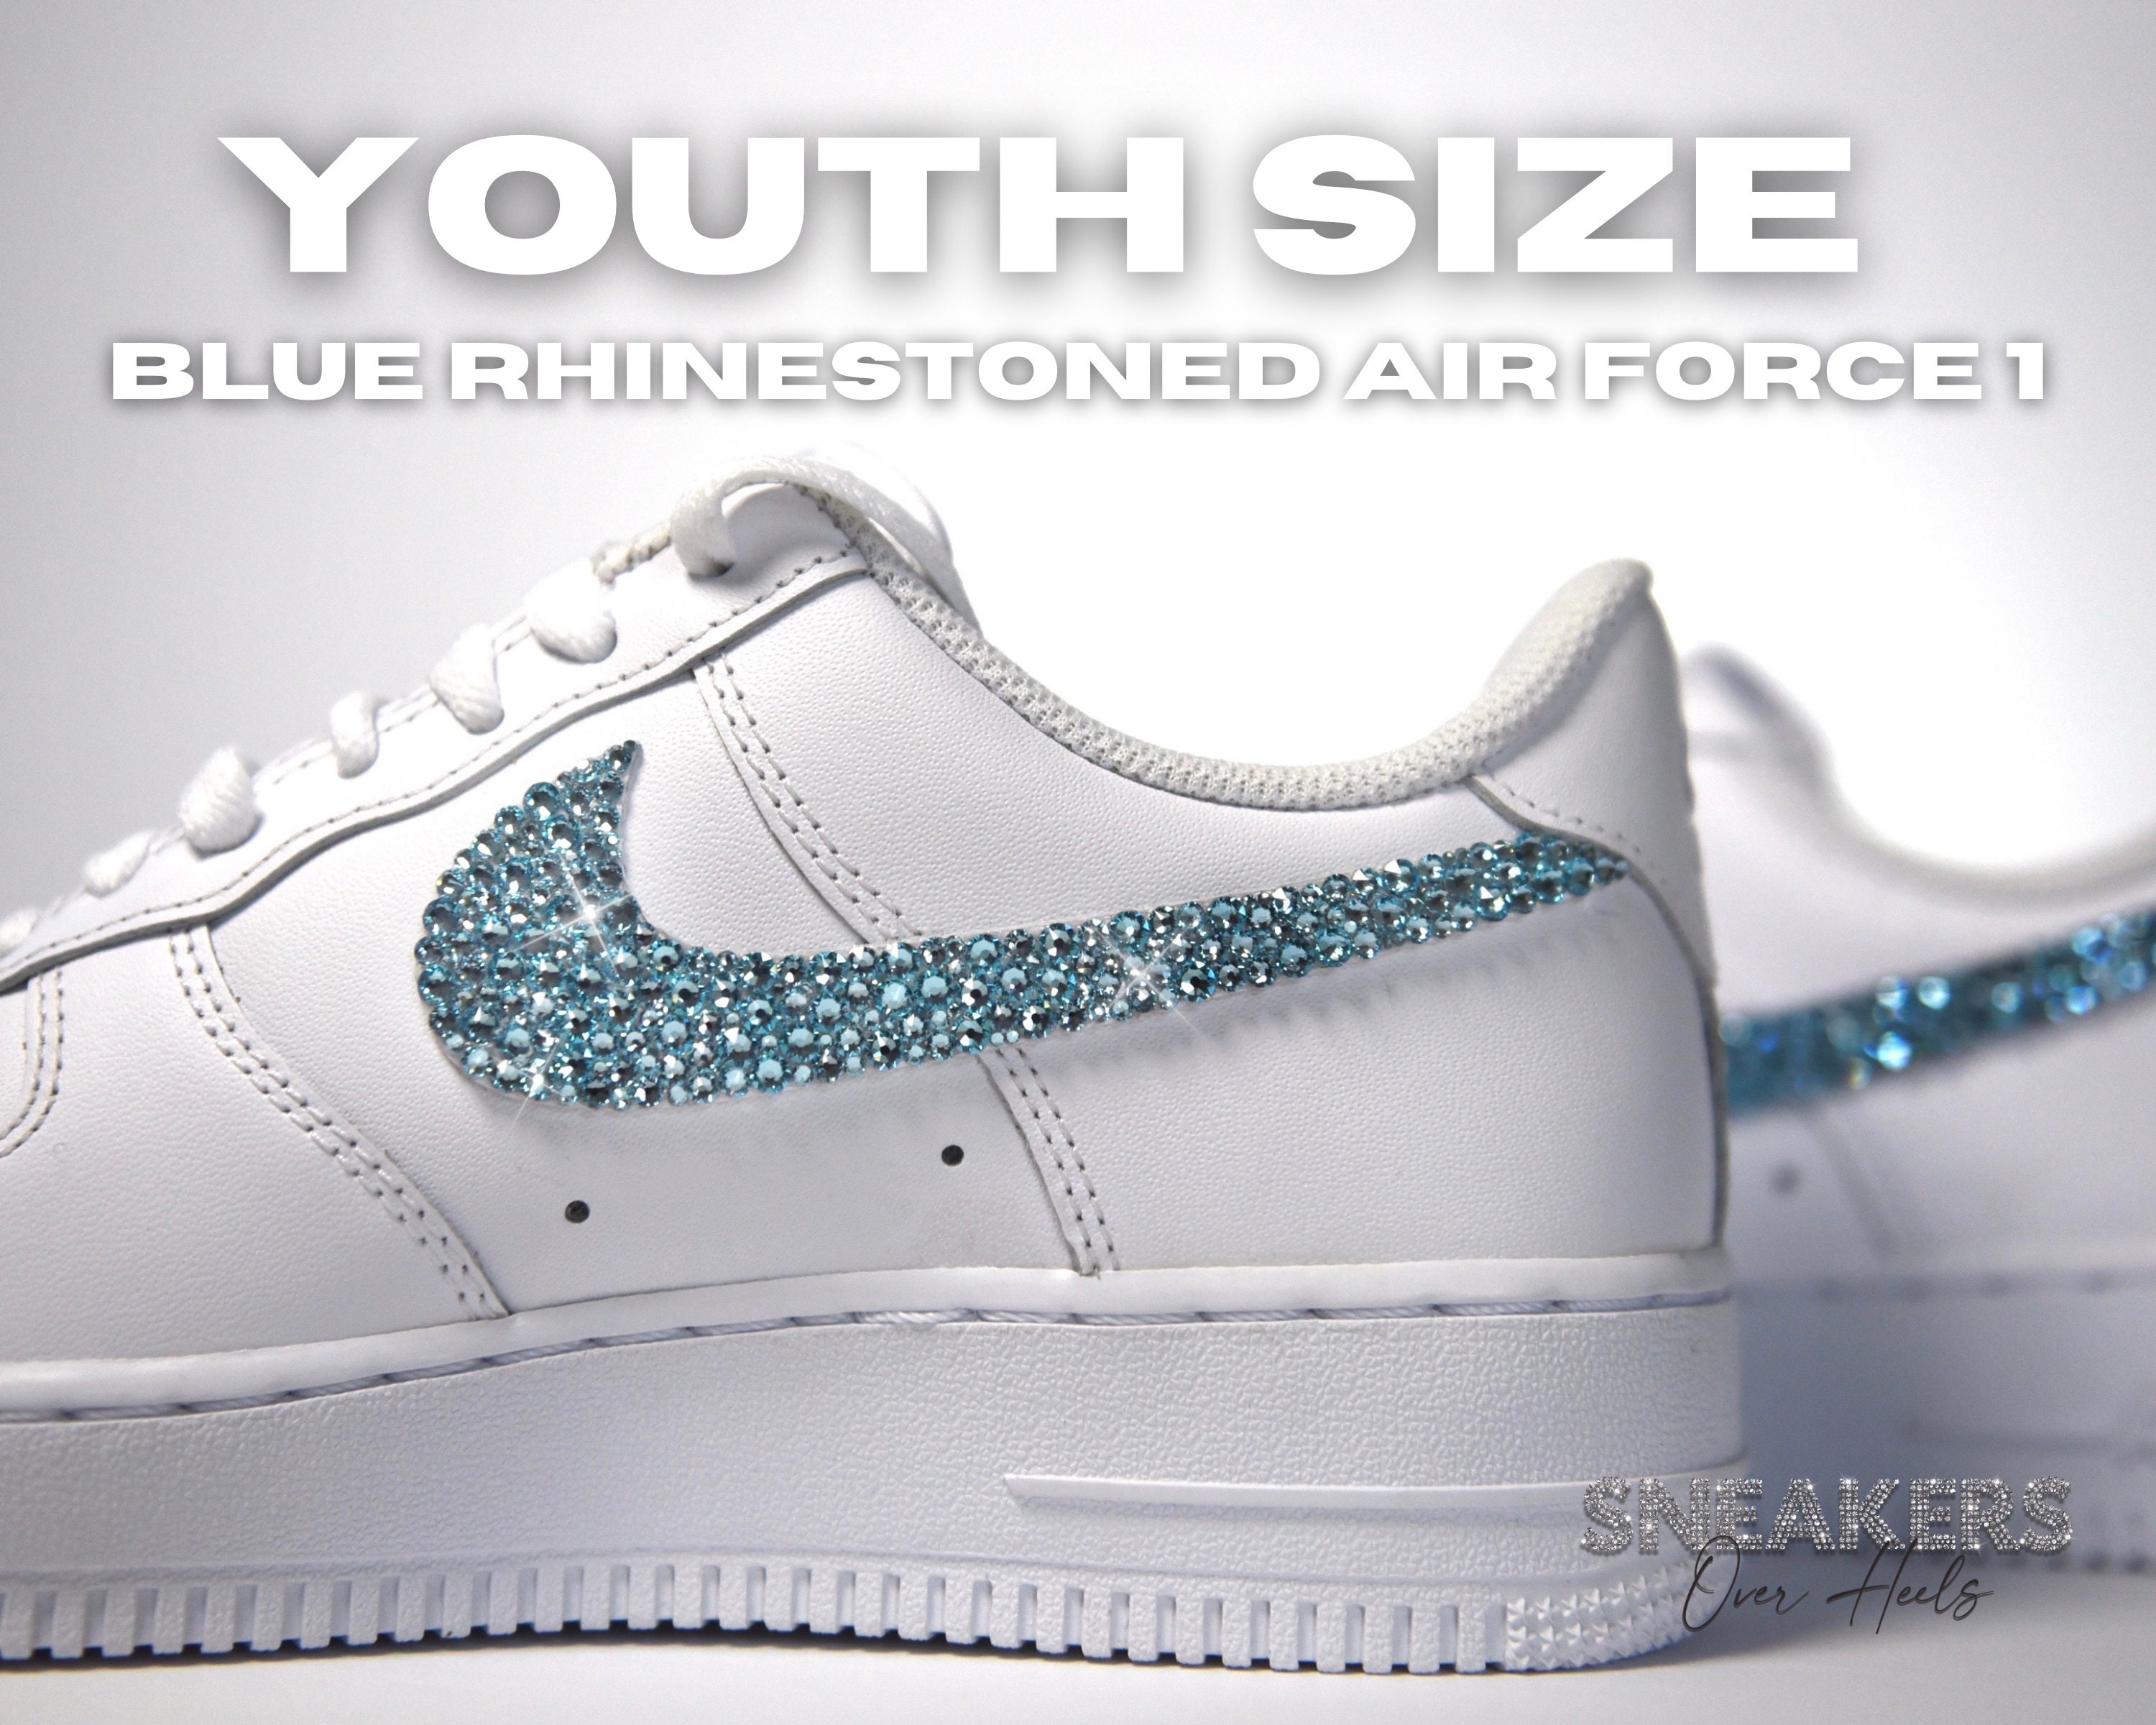 Nike Air Force 1 Swarovski Galaxy - Double G Customs - Custom sneakers